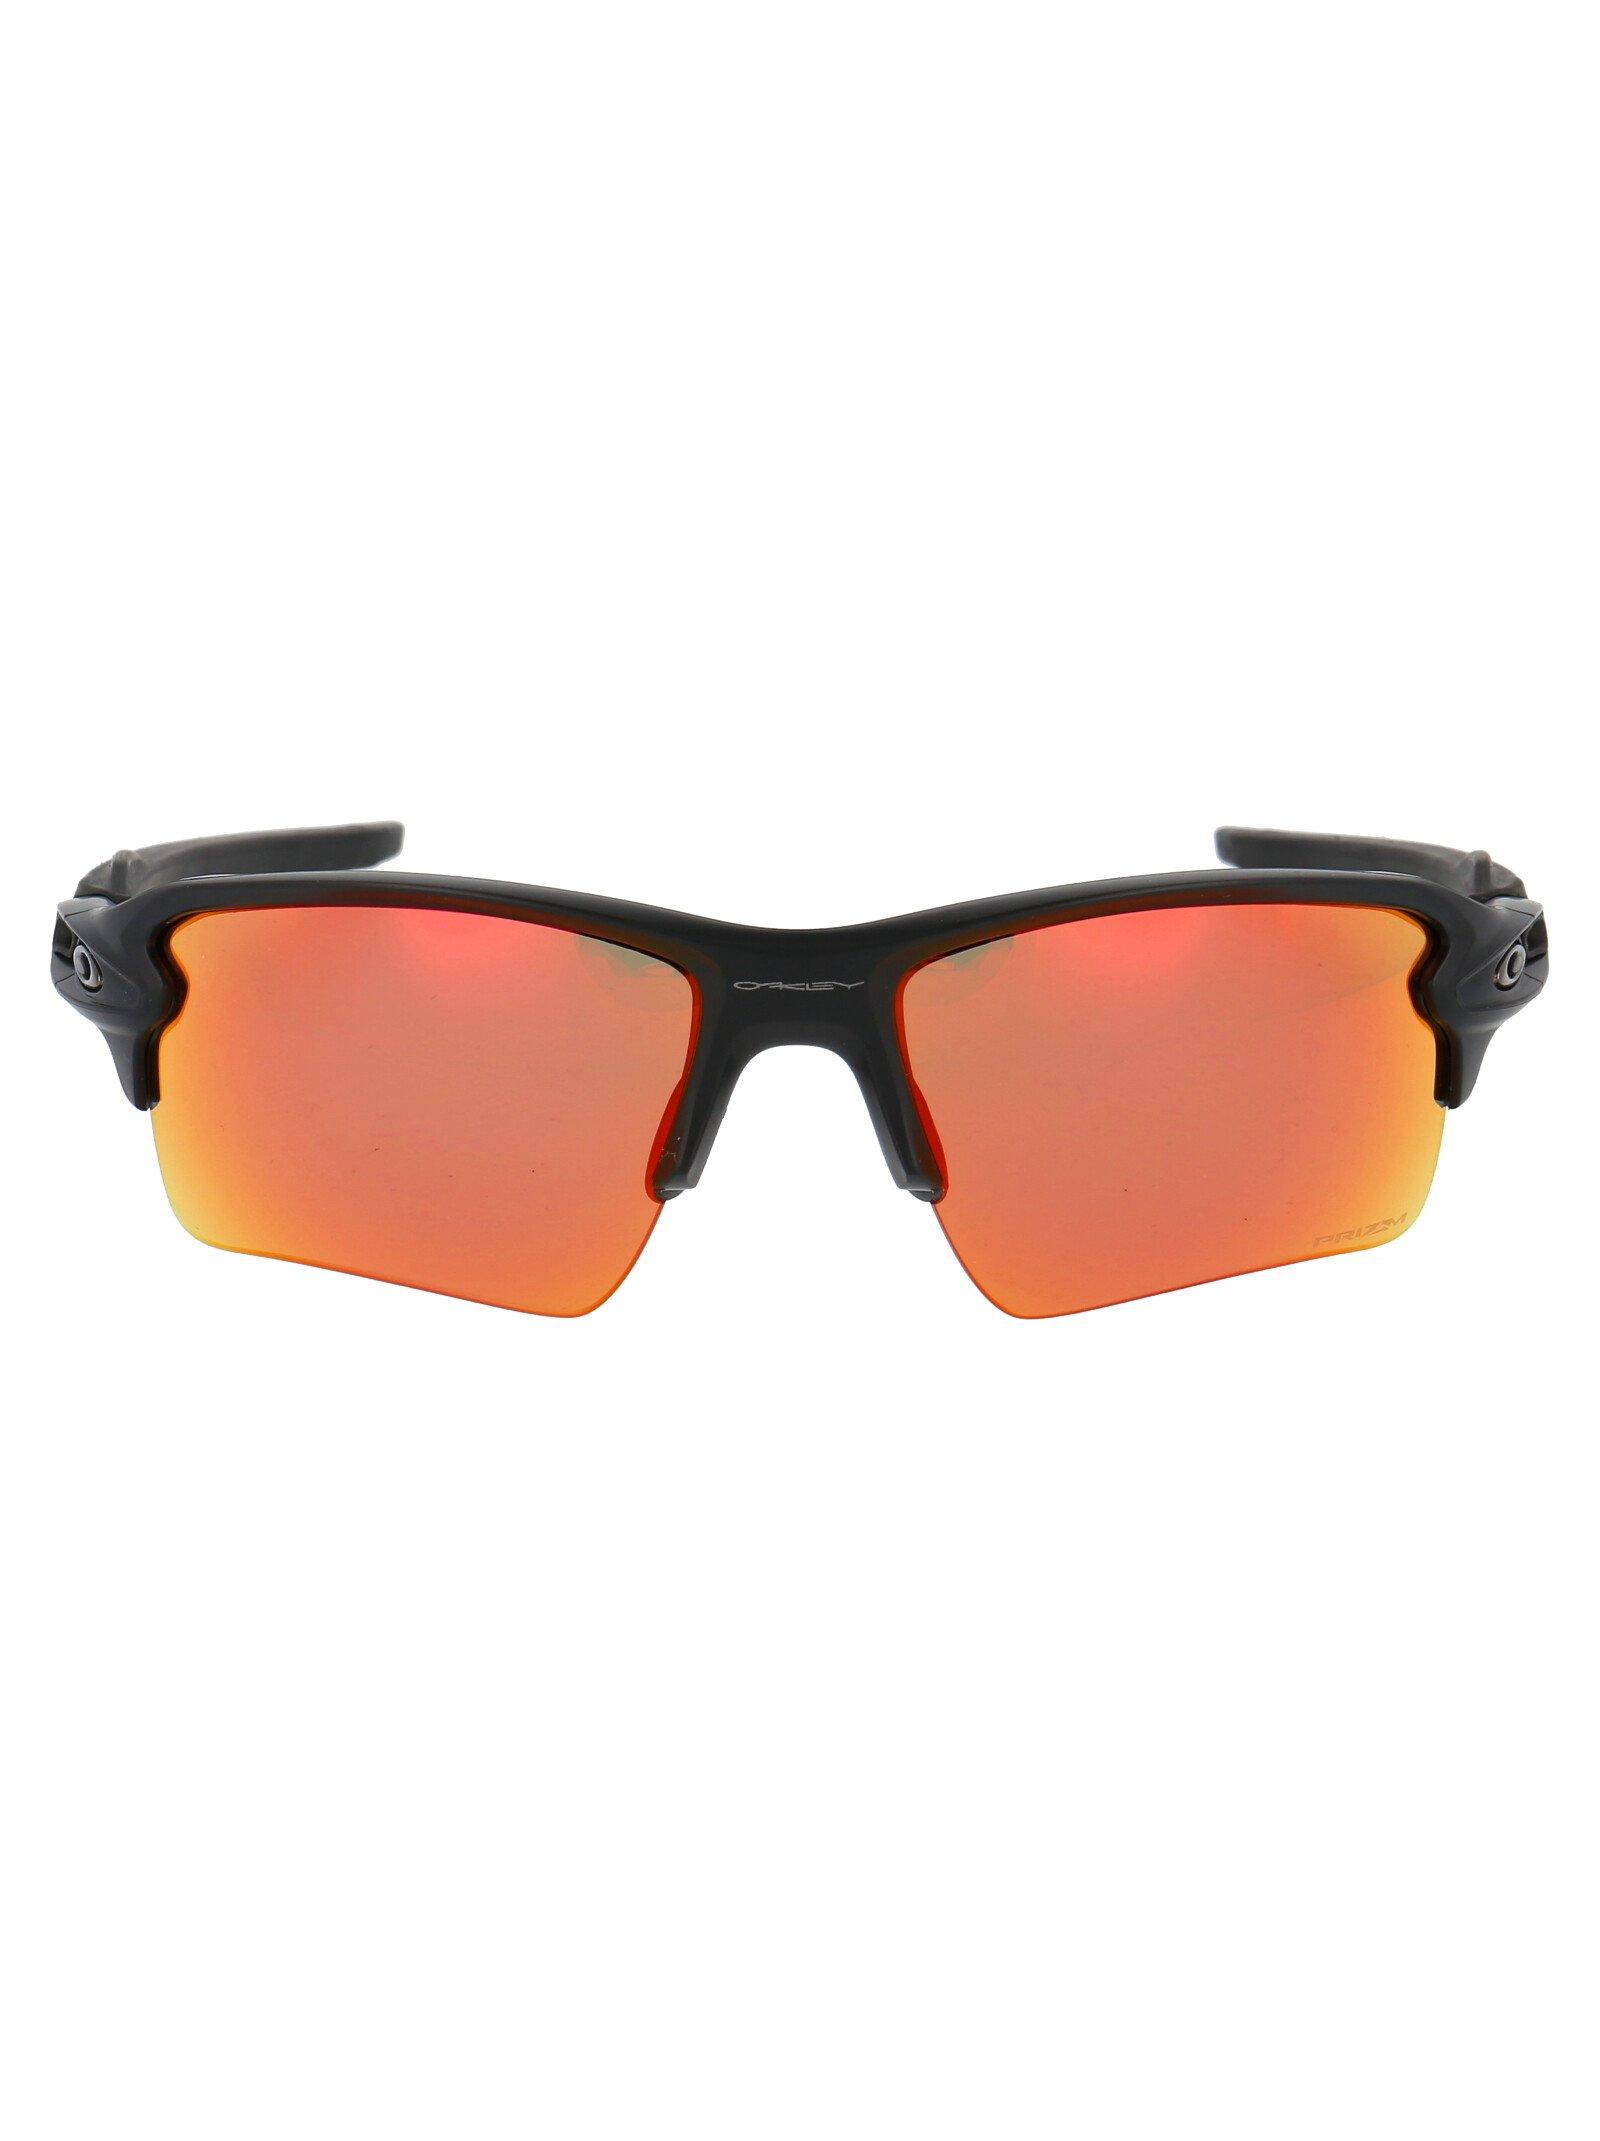 Oakley Sunglasses for Men - Lyst